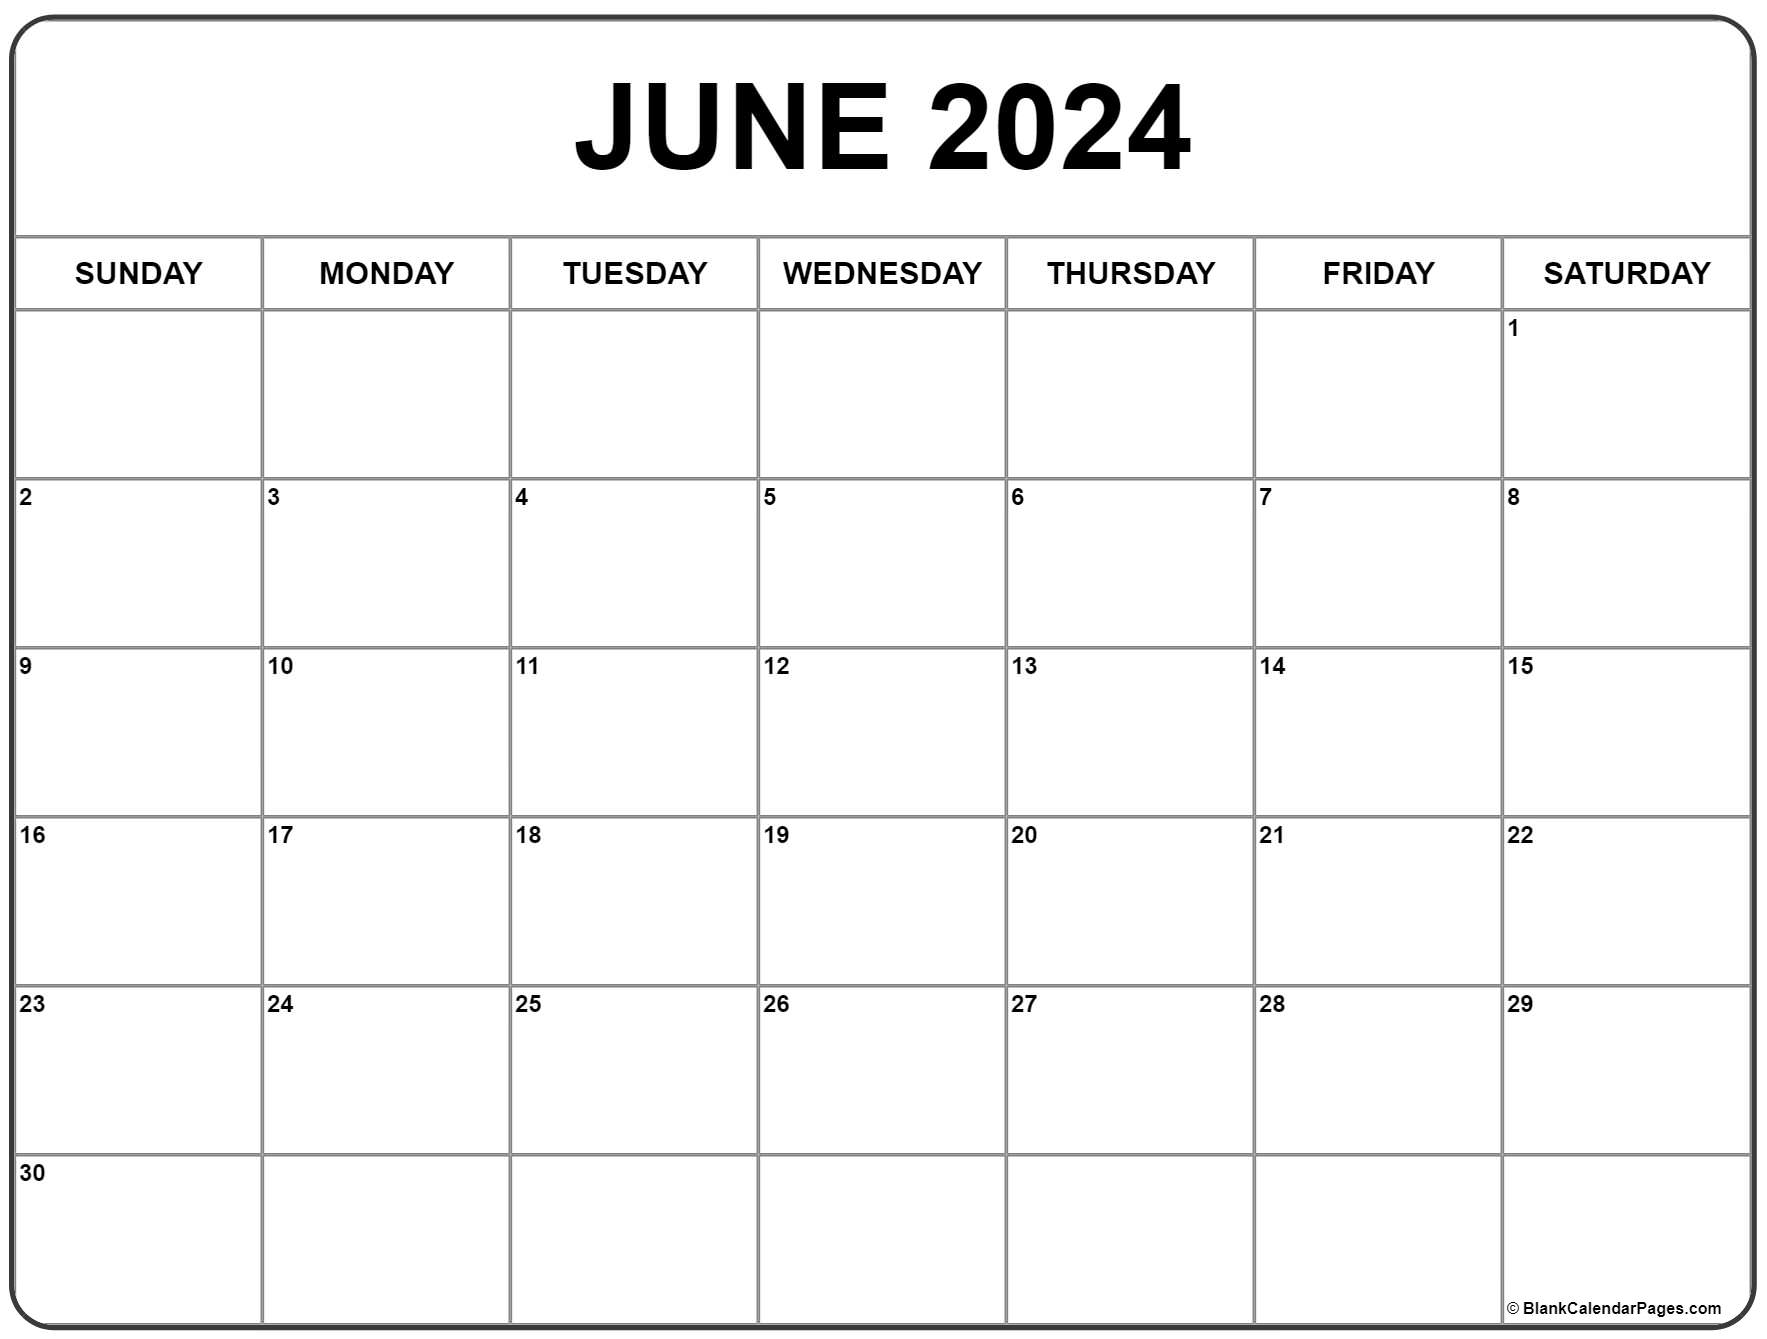 June 2024 Calendar | Free Printable Calendar for Blank 2024 June Calendar Printable